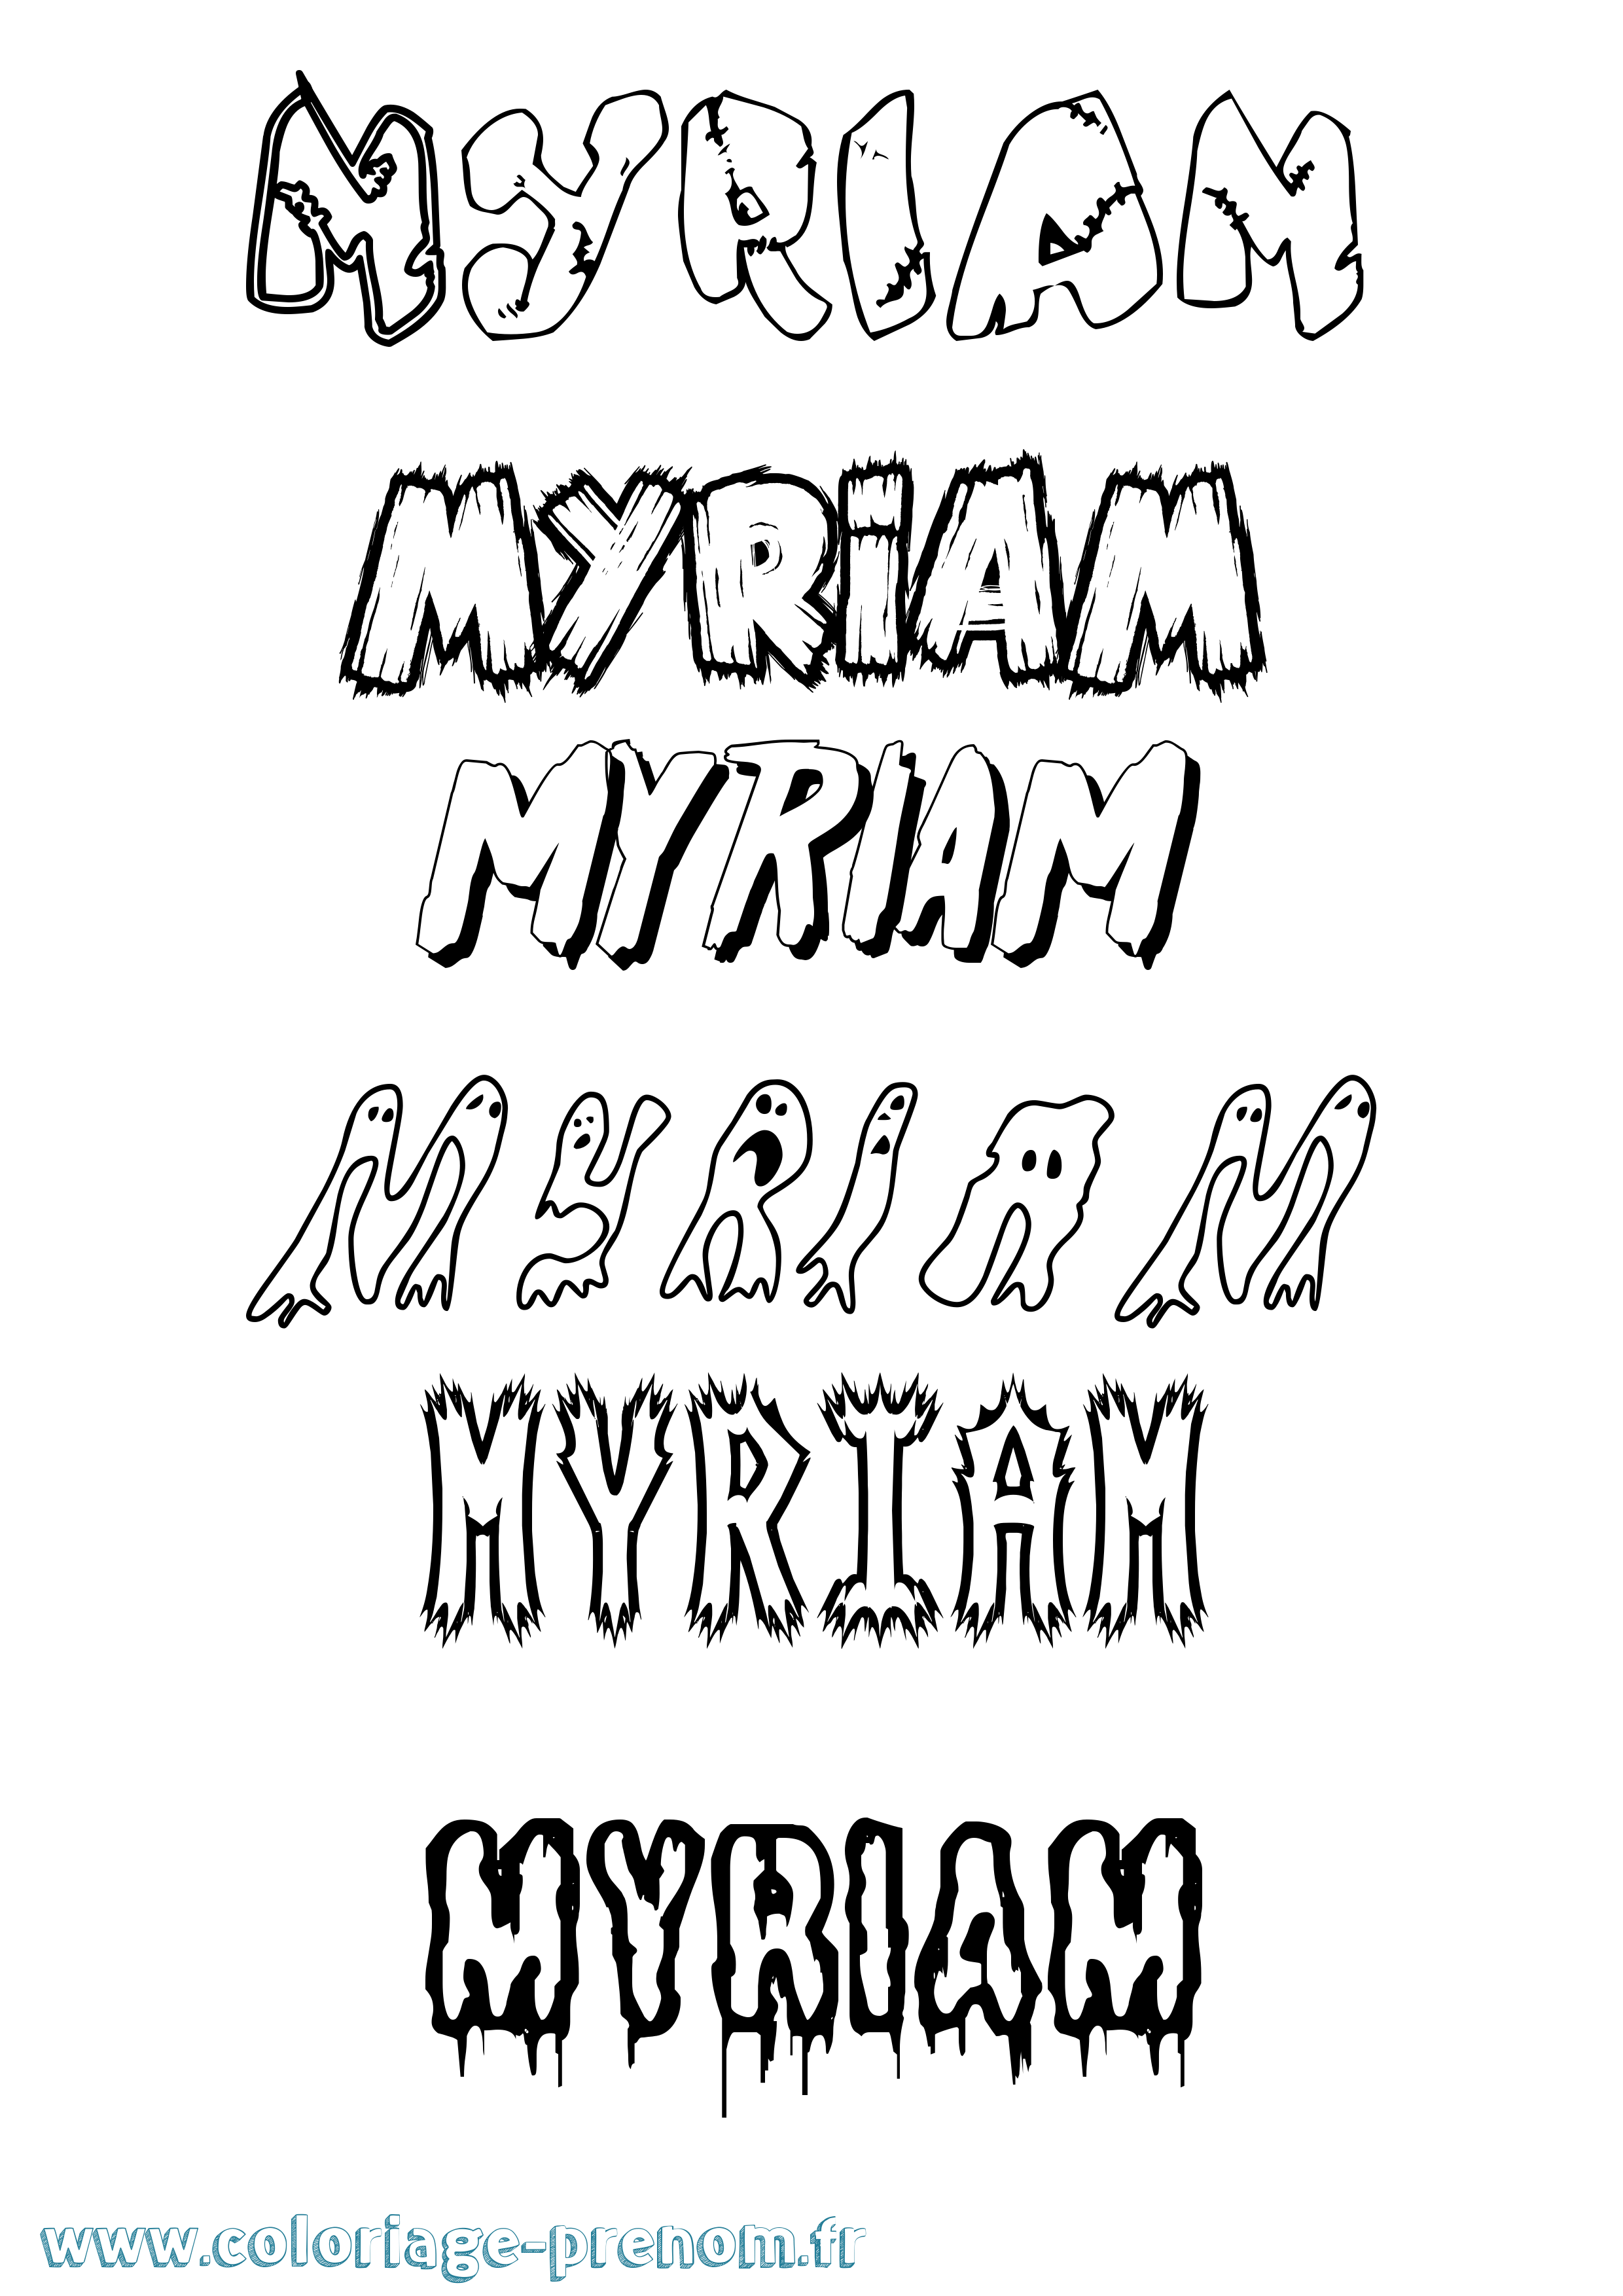 Coloriage prénom Myriam